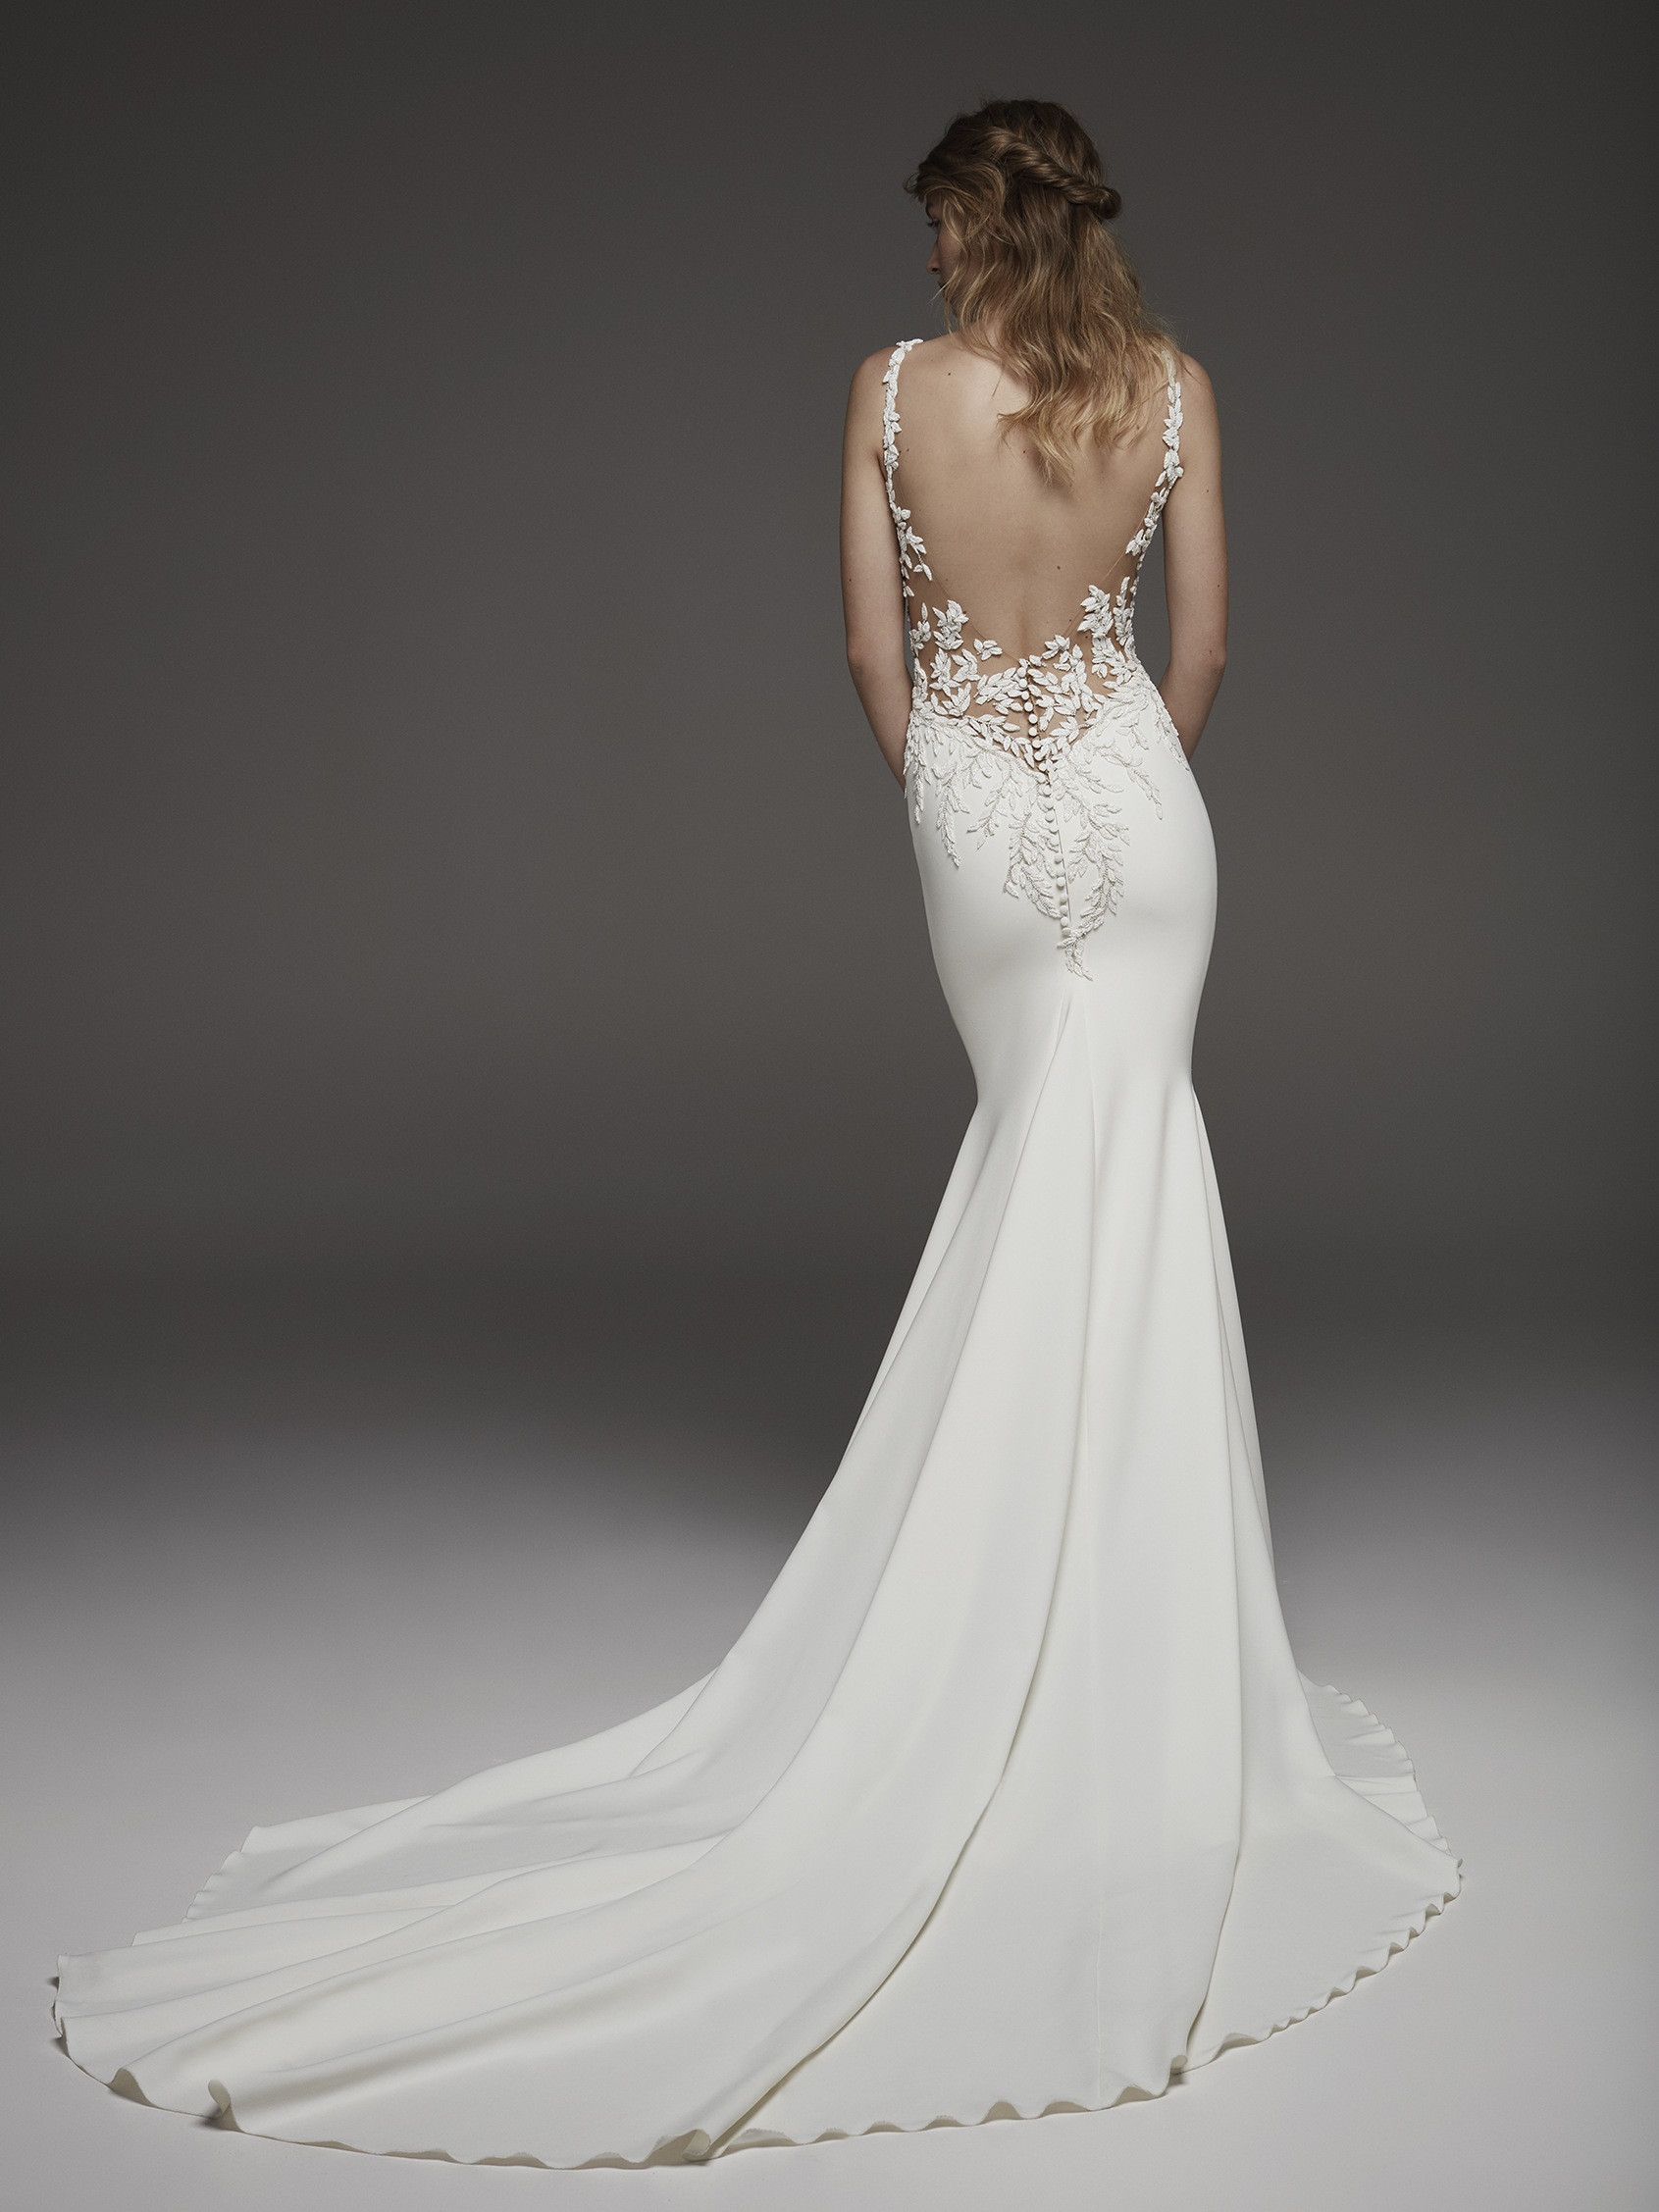 soft lace sheath wedding dress with low back